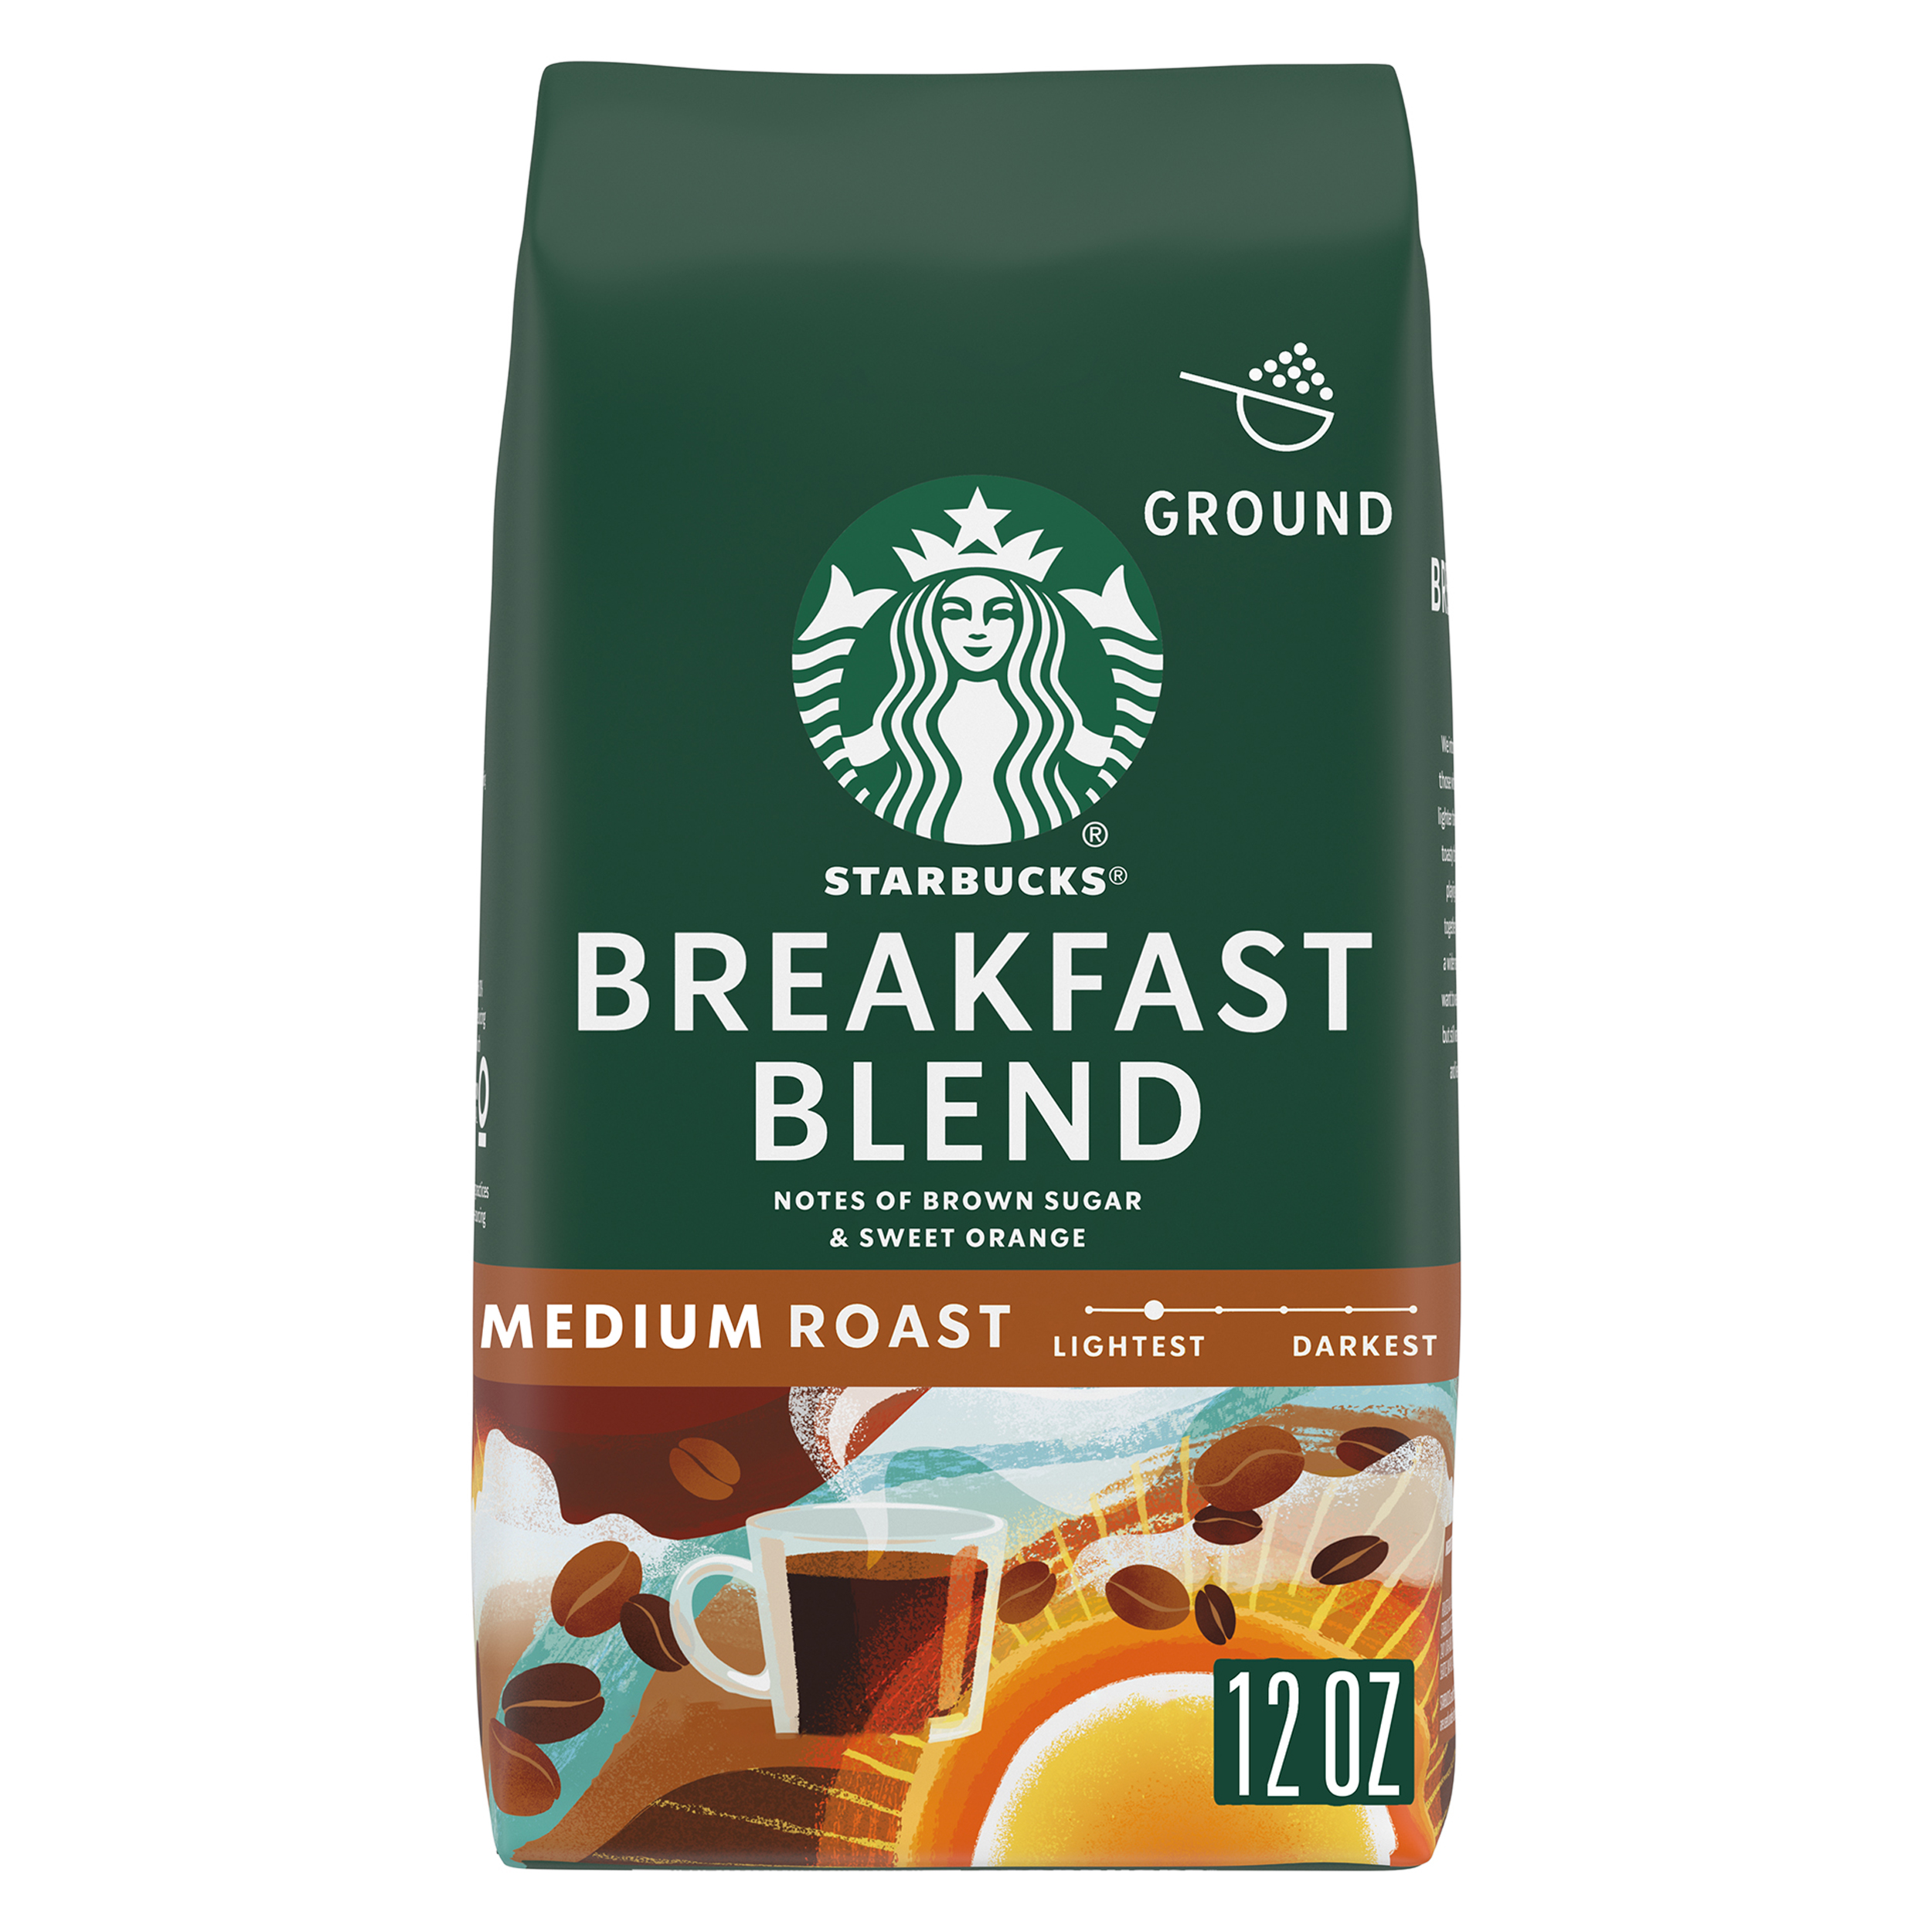 Starbucks Arabica Beans Breakfast Blend, Medium Roast Ground Coffee, 12 oz - image 1 of 8